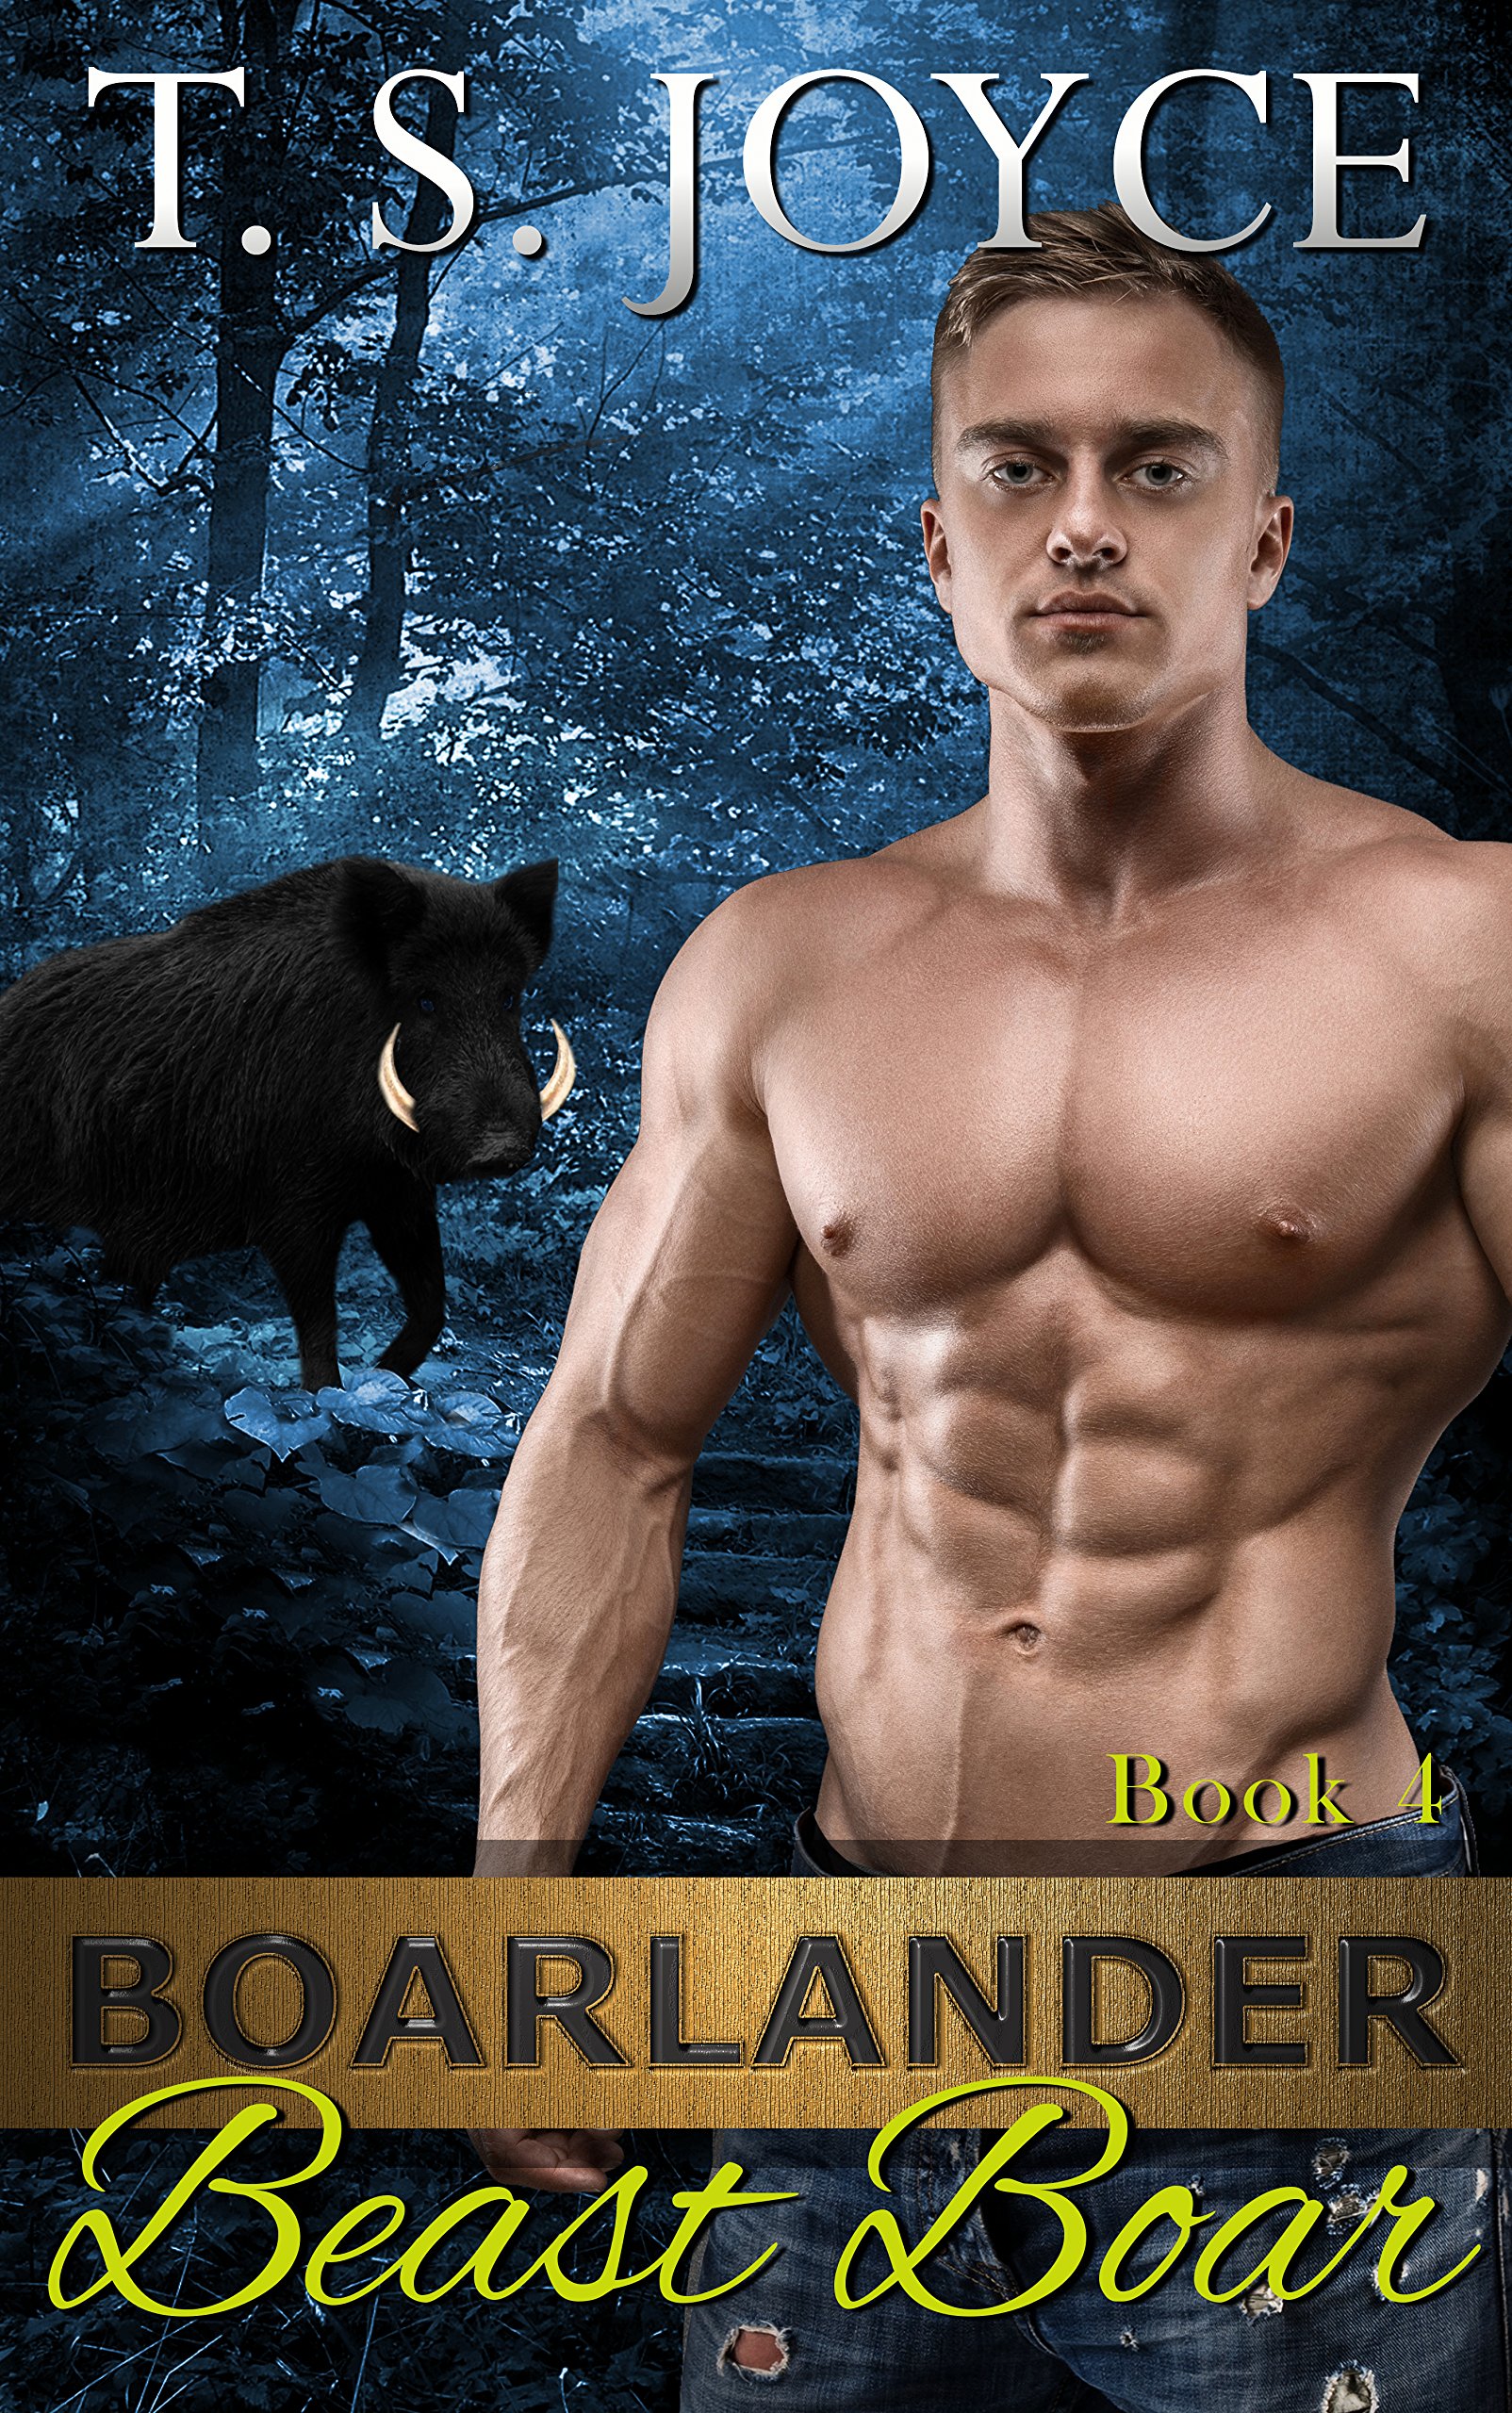 Book Cover Boarlander Beast Boar (Boarlander Bears Book 4)